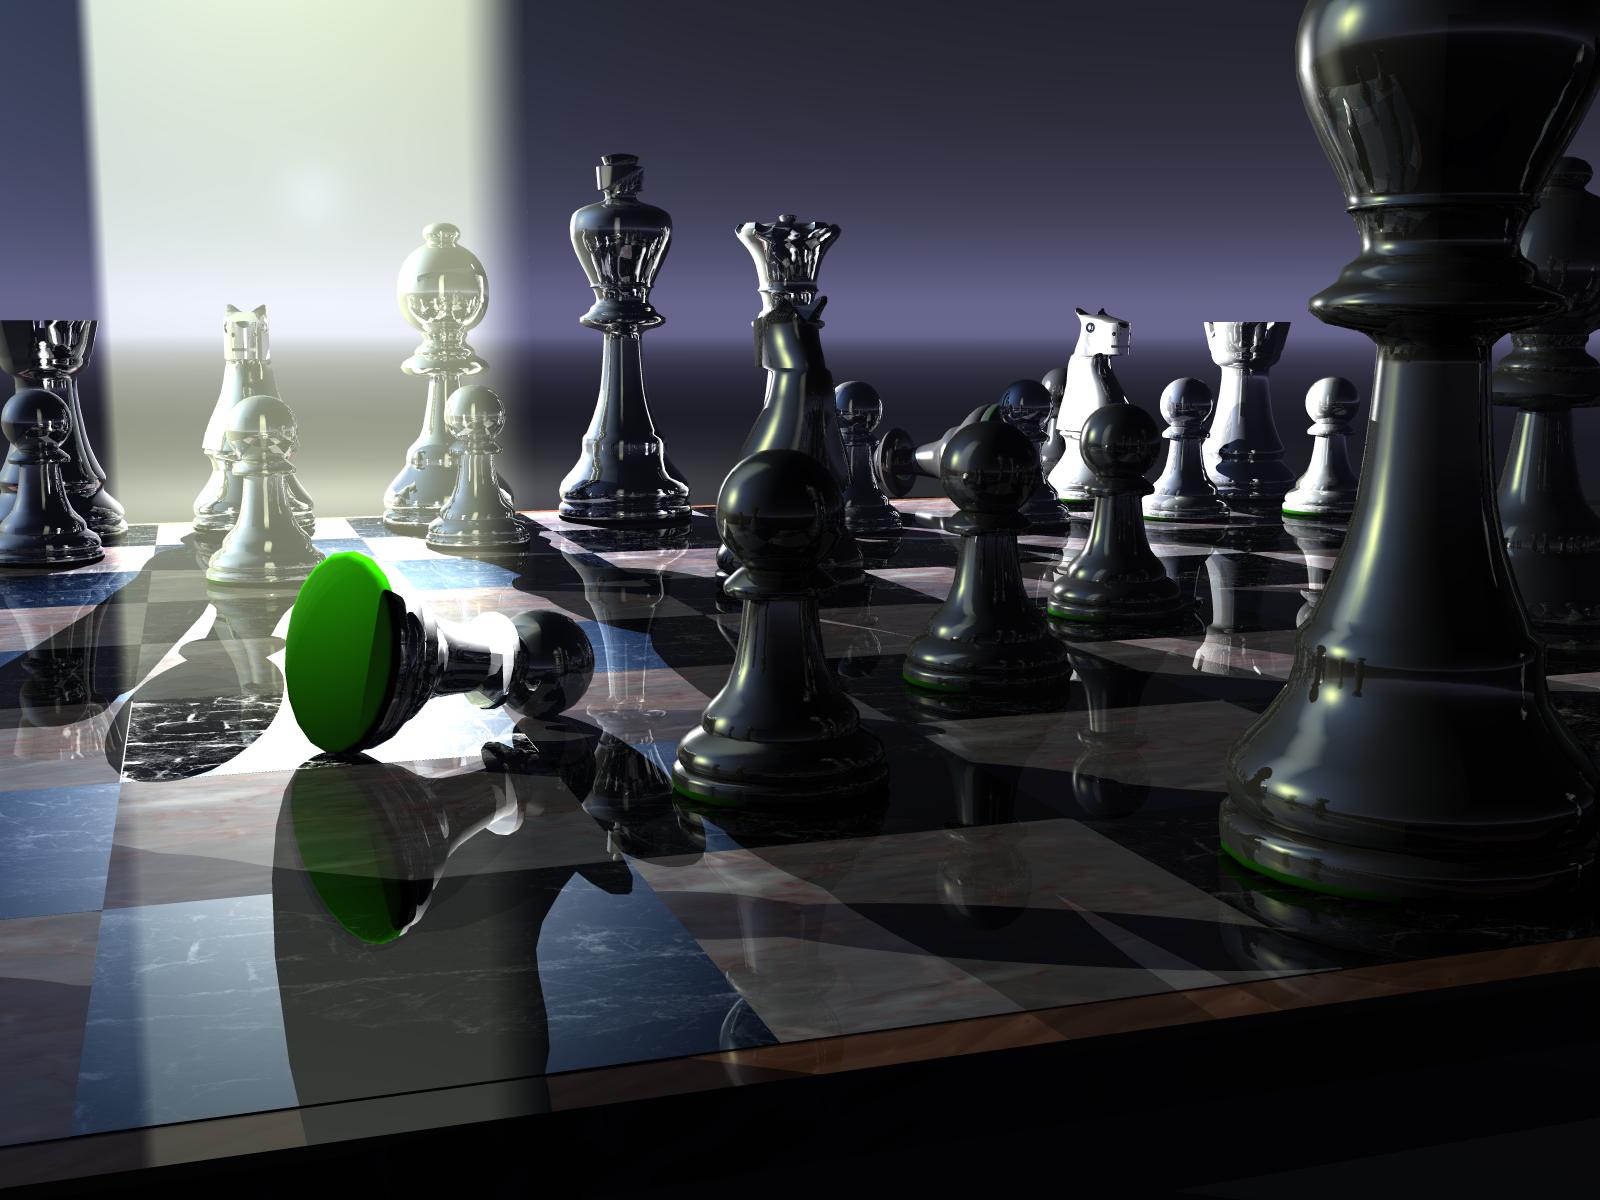 https://blogger.googleusercontent.com/img/b/R29vZ2xl/AVvXsEgWxp1BoN6xAN8offxbBbWTlUGc__Tj9JmfarY9ehQMQyGlEhuhx2fjeka8KImAeeRNXCz4TPHmQWYf7otARWT0XUBAM7ui7FjUksPy54XyXgPHWLEbXXoqXX5V1tZlngNydddbKin6jS5r/s1600/3d-wallpaper-desktop-chess-board-3d.jpg